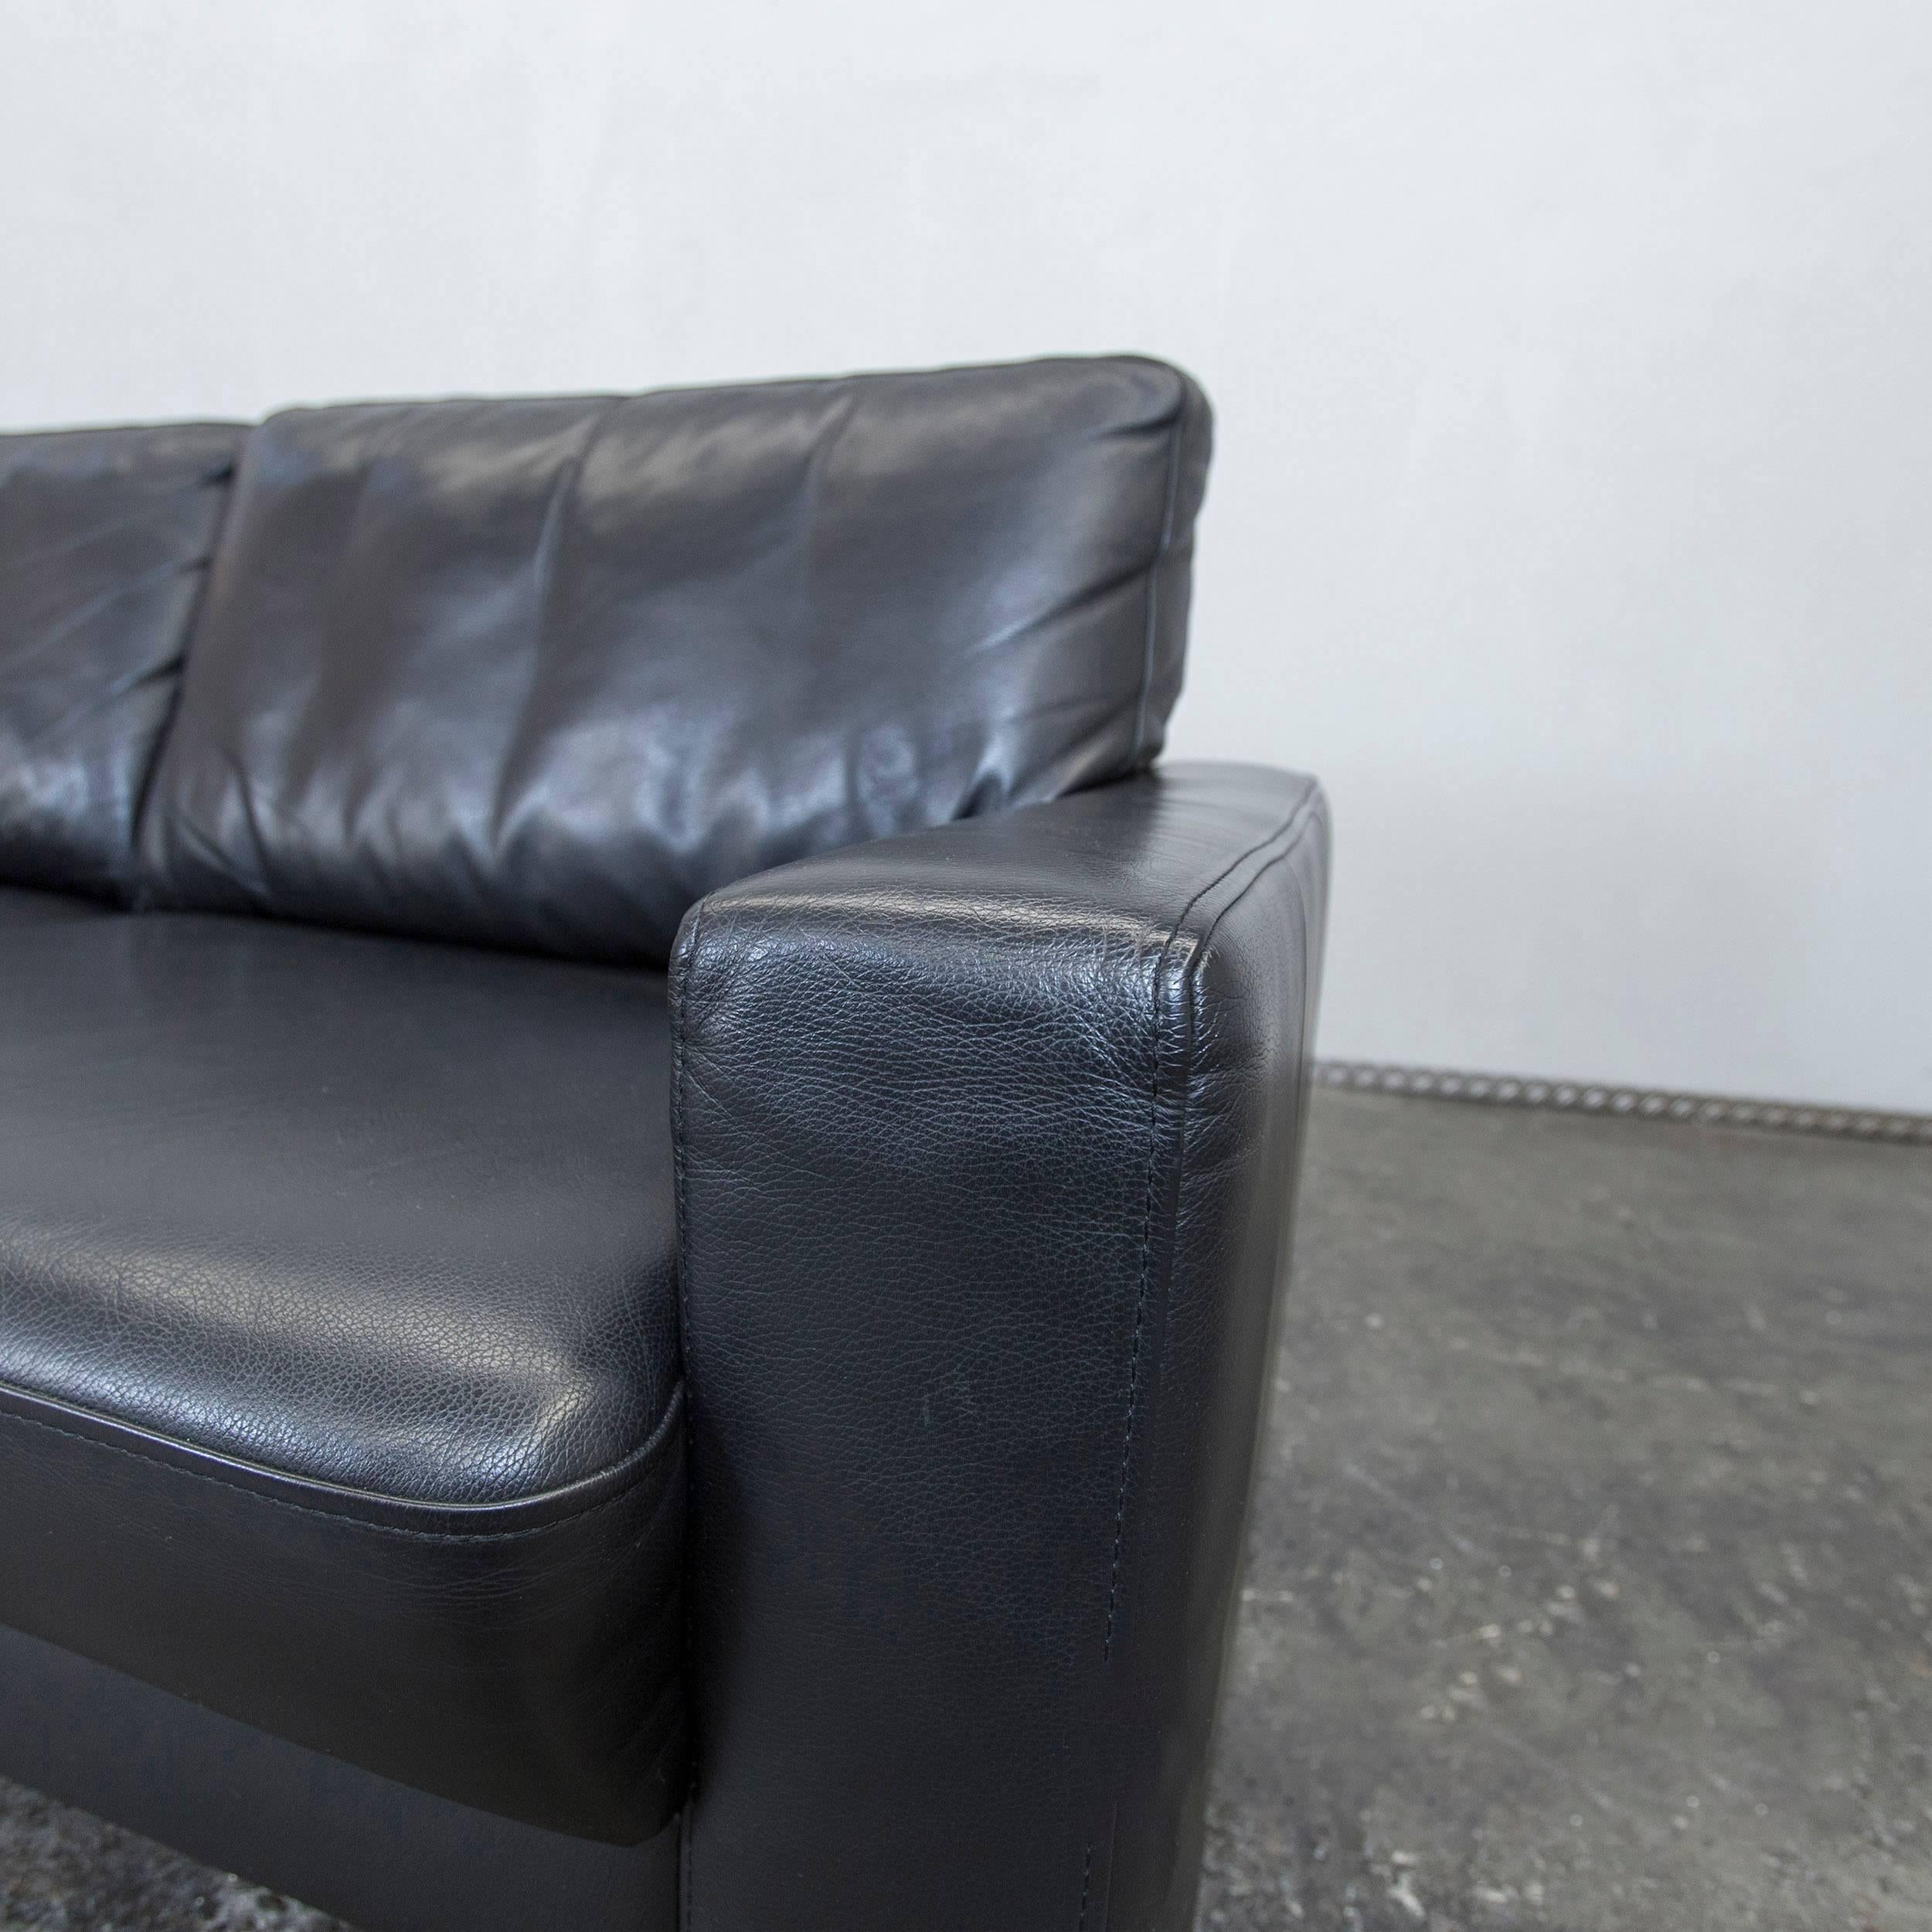 Contemporary Külkens & Sohn Designer Leather Sofa Black Two-Seat Couch Modern For Sale